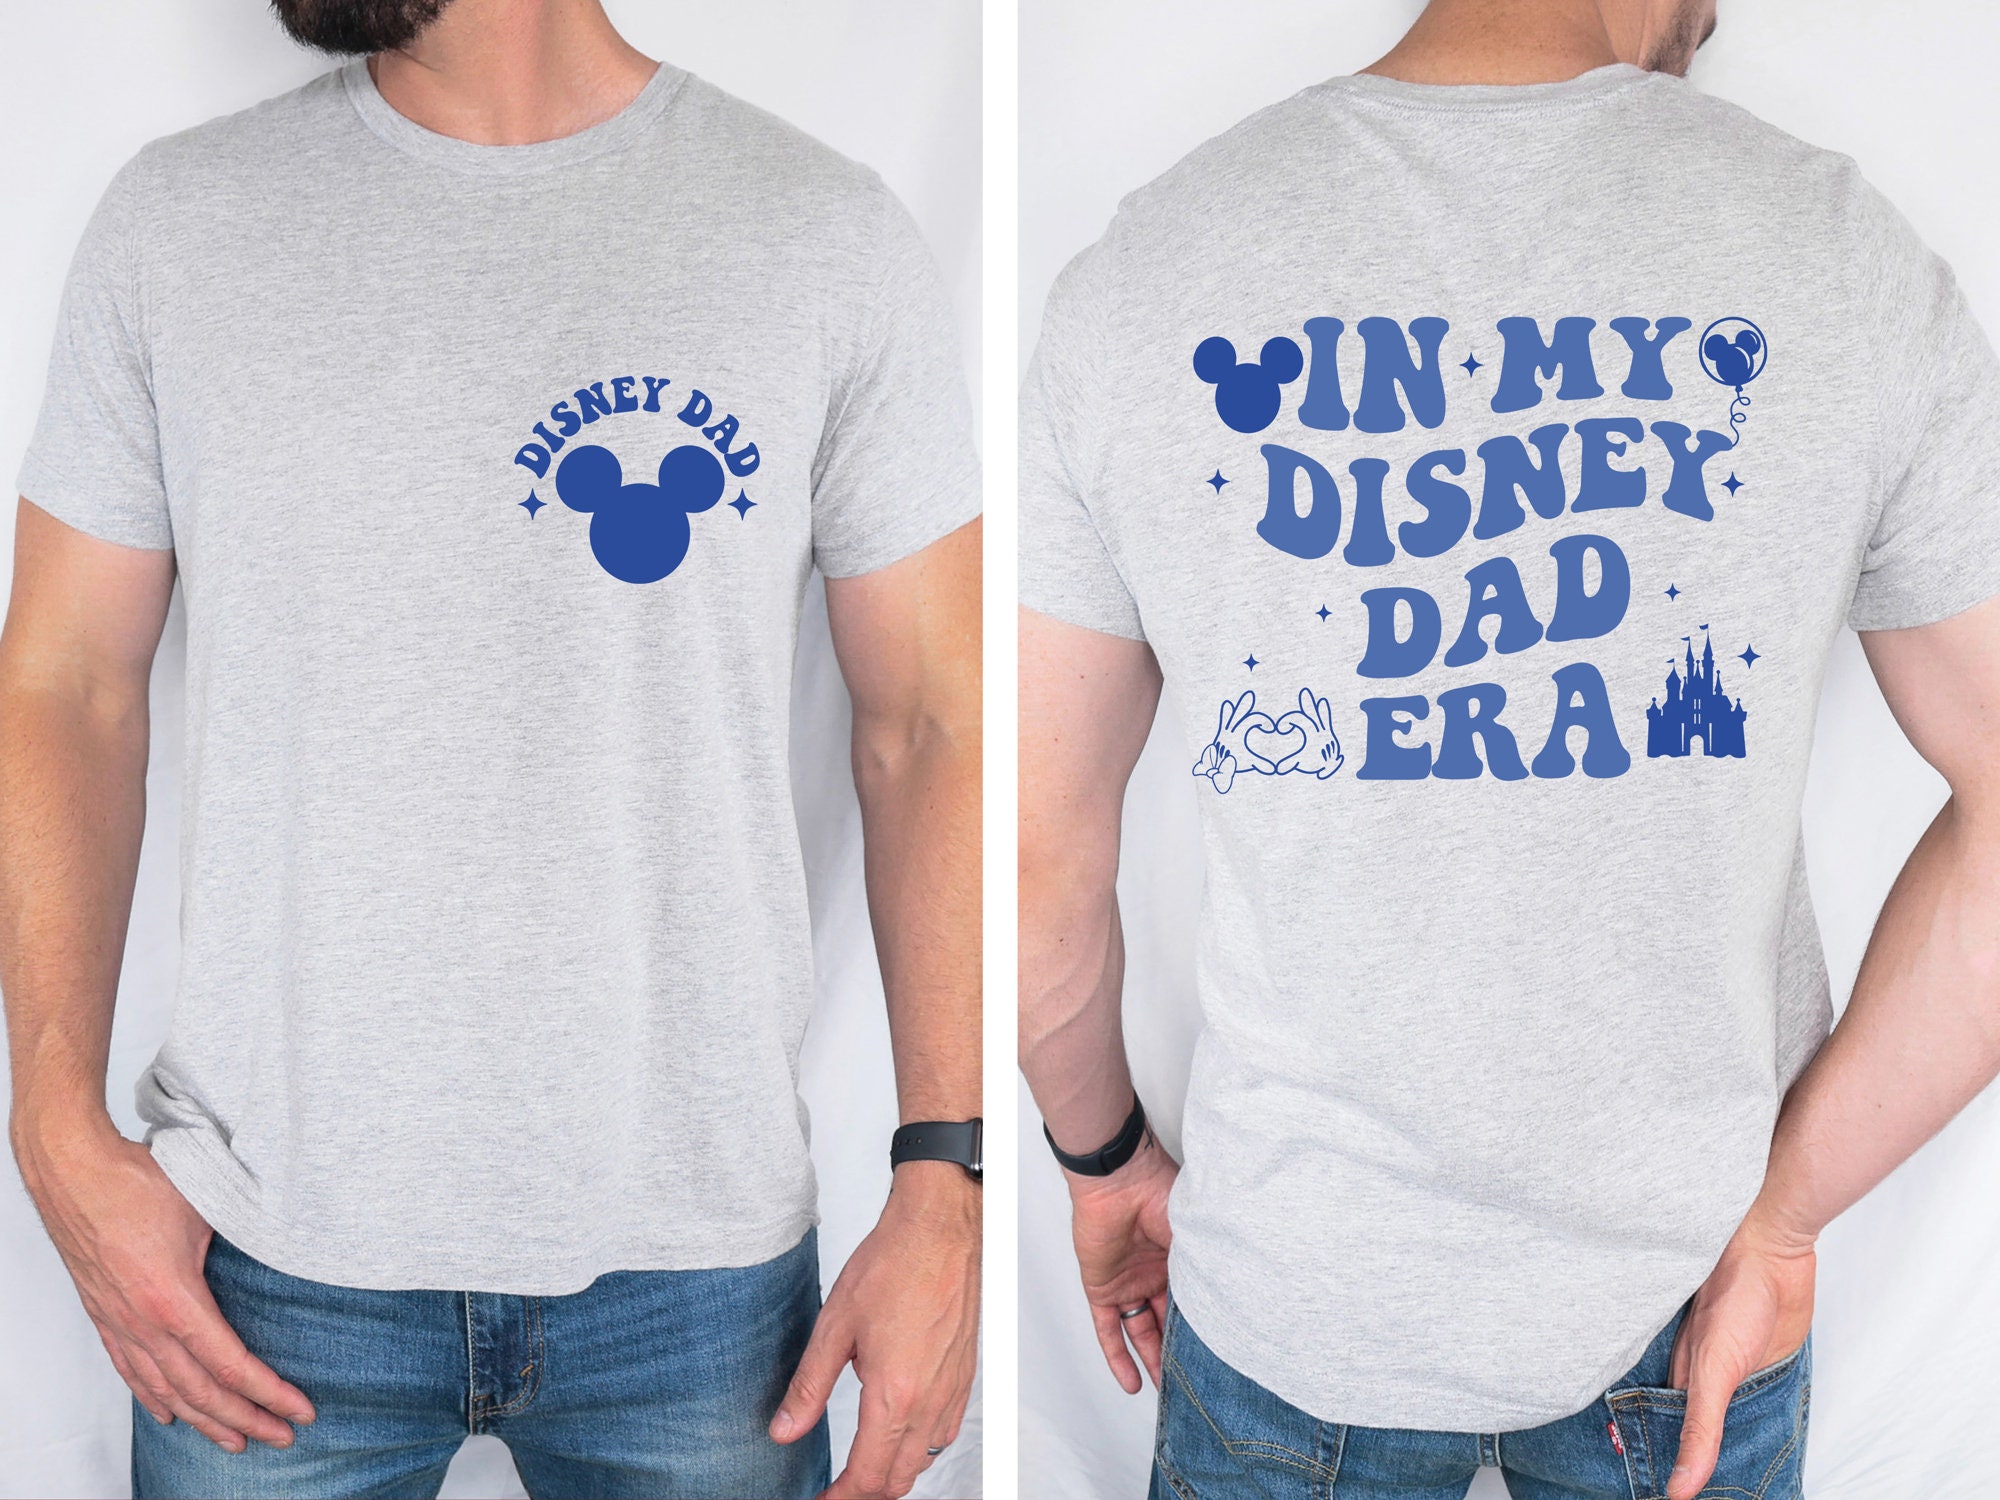 Discover In My Disney Dad Era Shirt, Disney Dad Shirt, Mickey Mouse Dad Shirt, Disney Dad Shirt